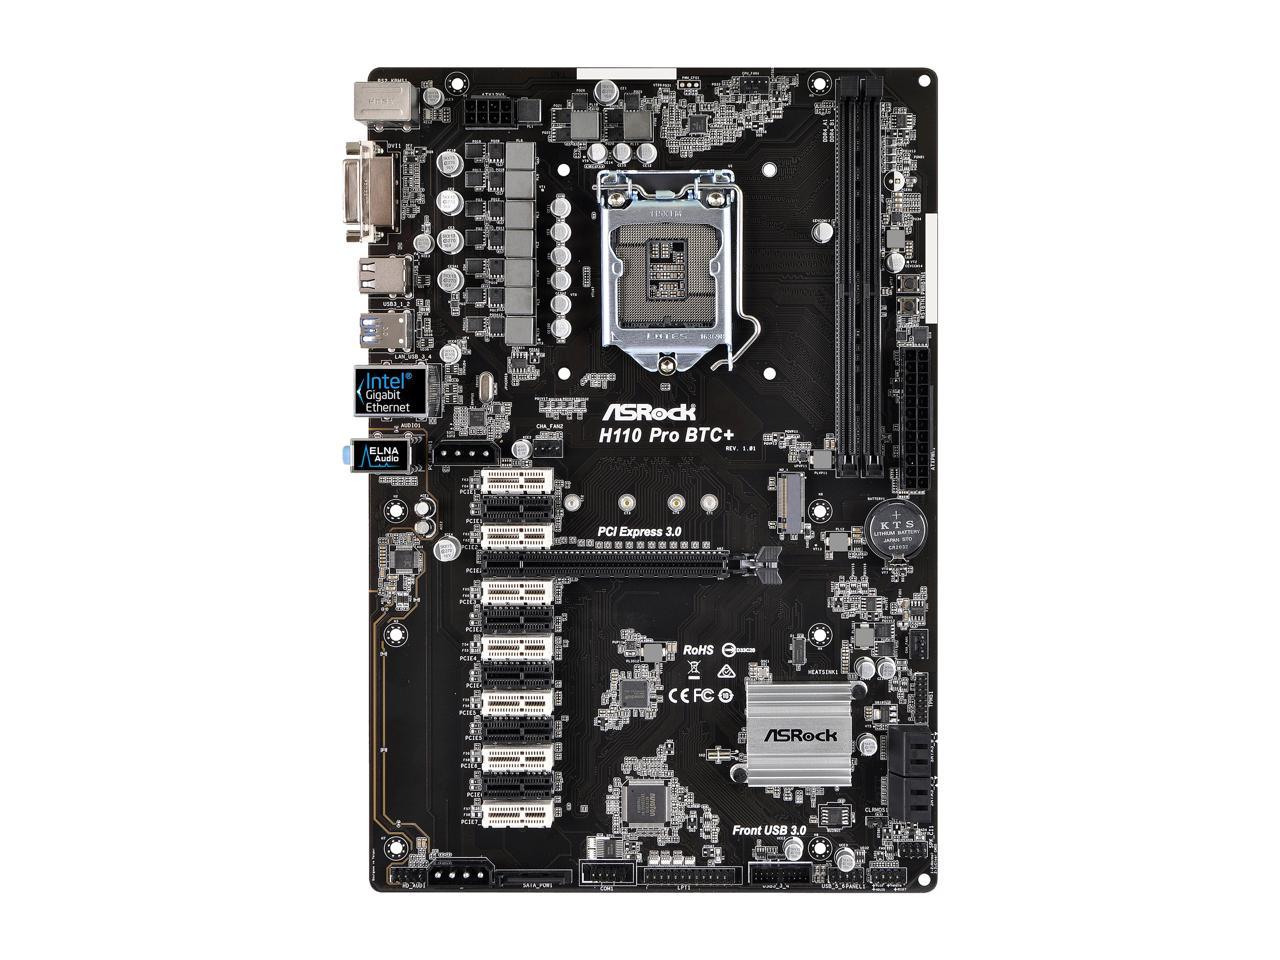 Asrock H110 Pro Btc+ Lga 1151 Intel H110 Sata 6Gb/S Atx Intel For Cryptocurrency Mining (Btc) Motherboard